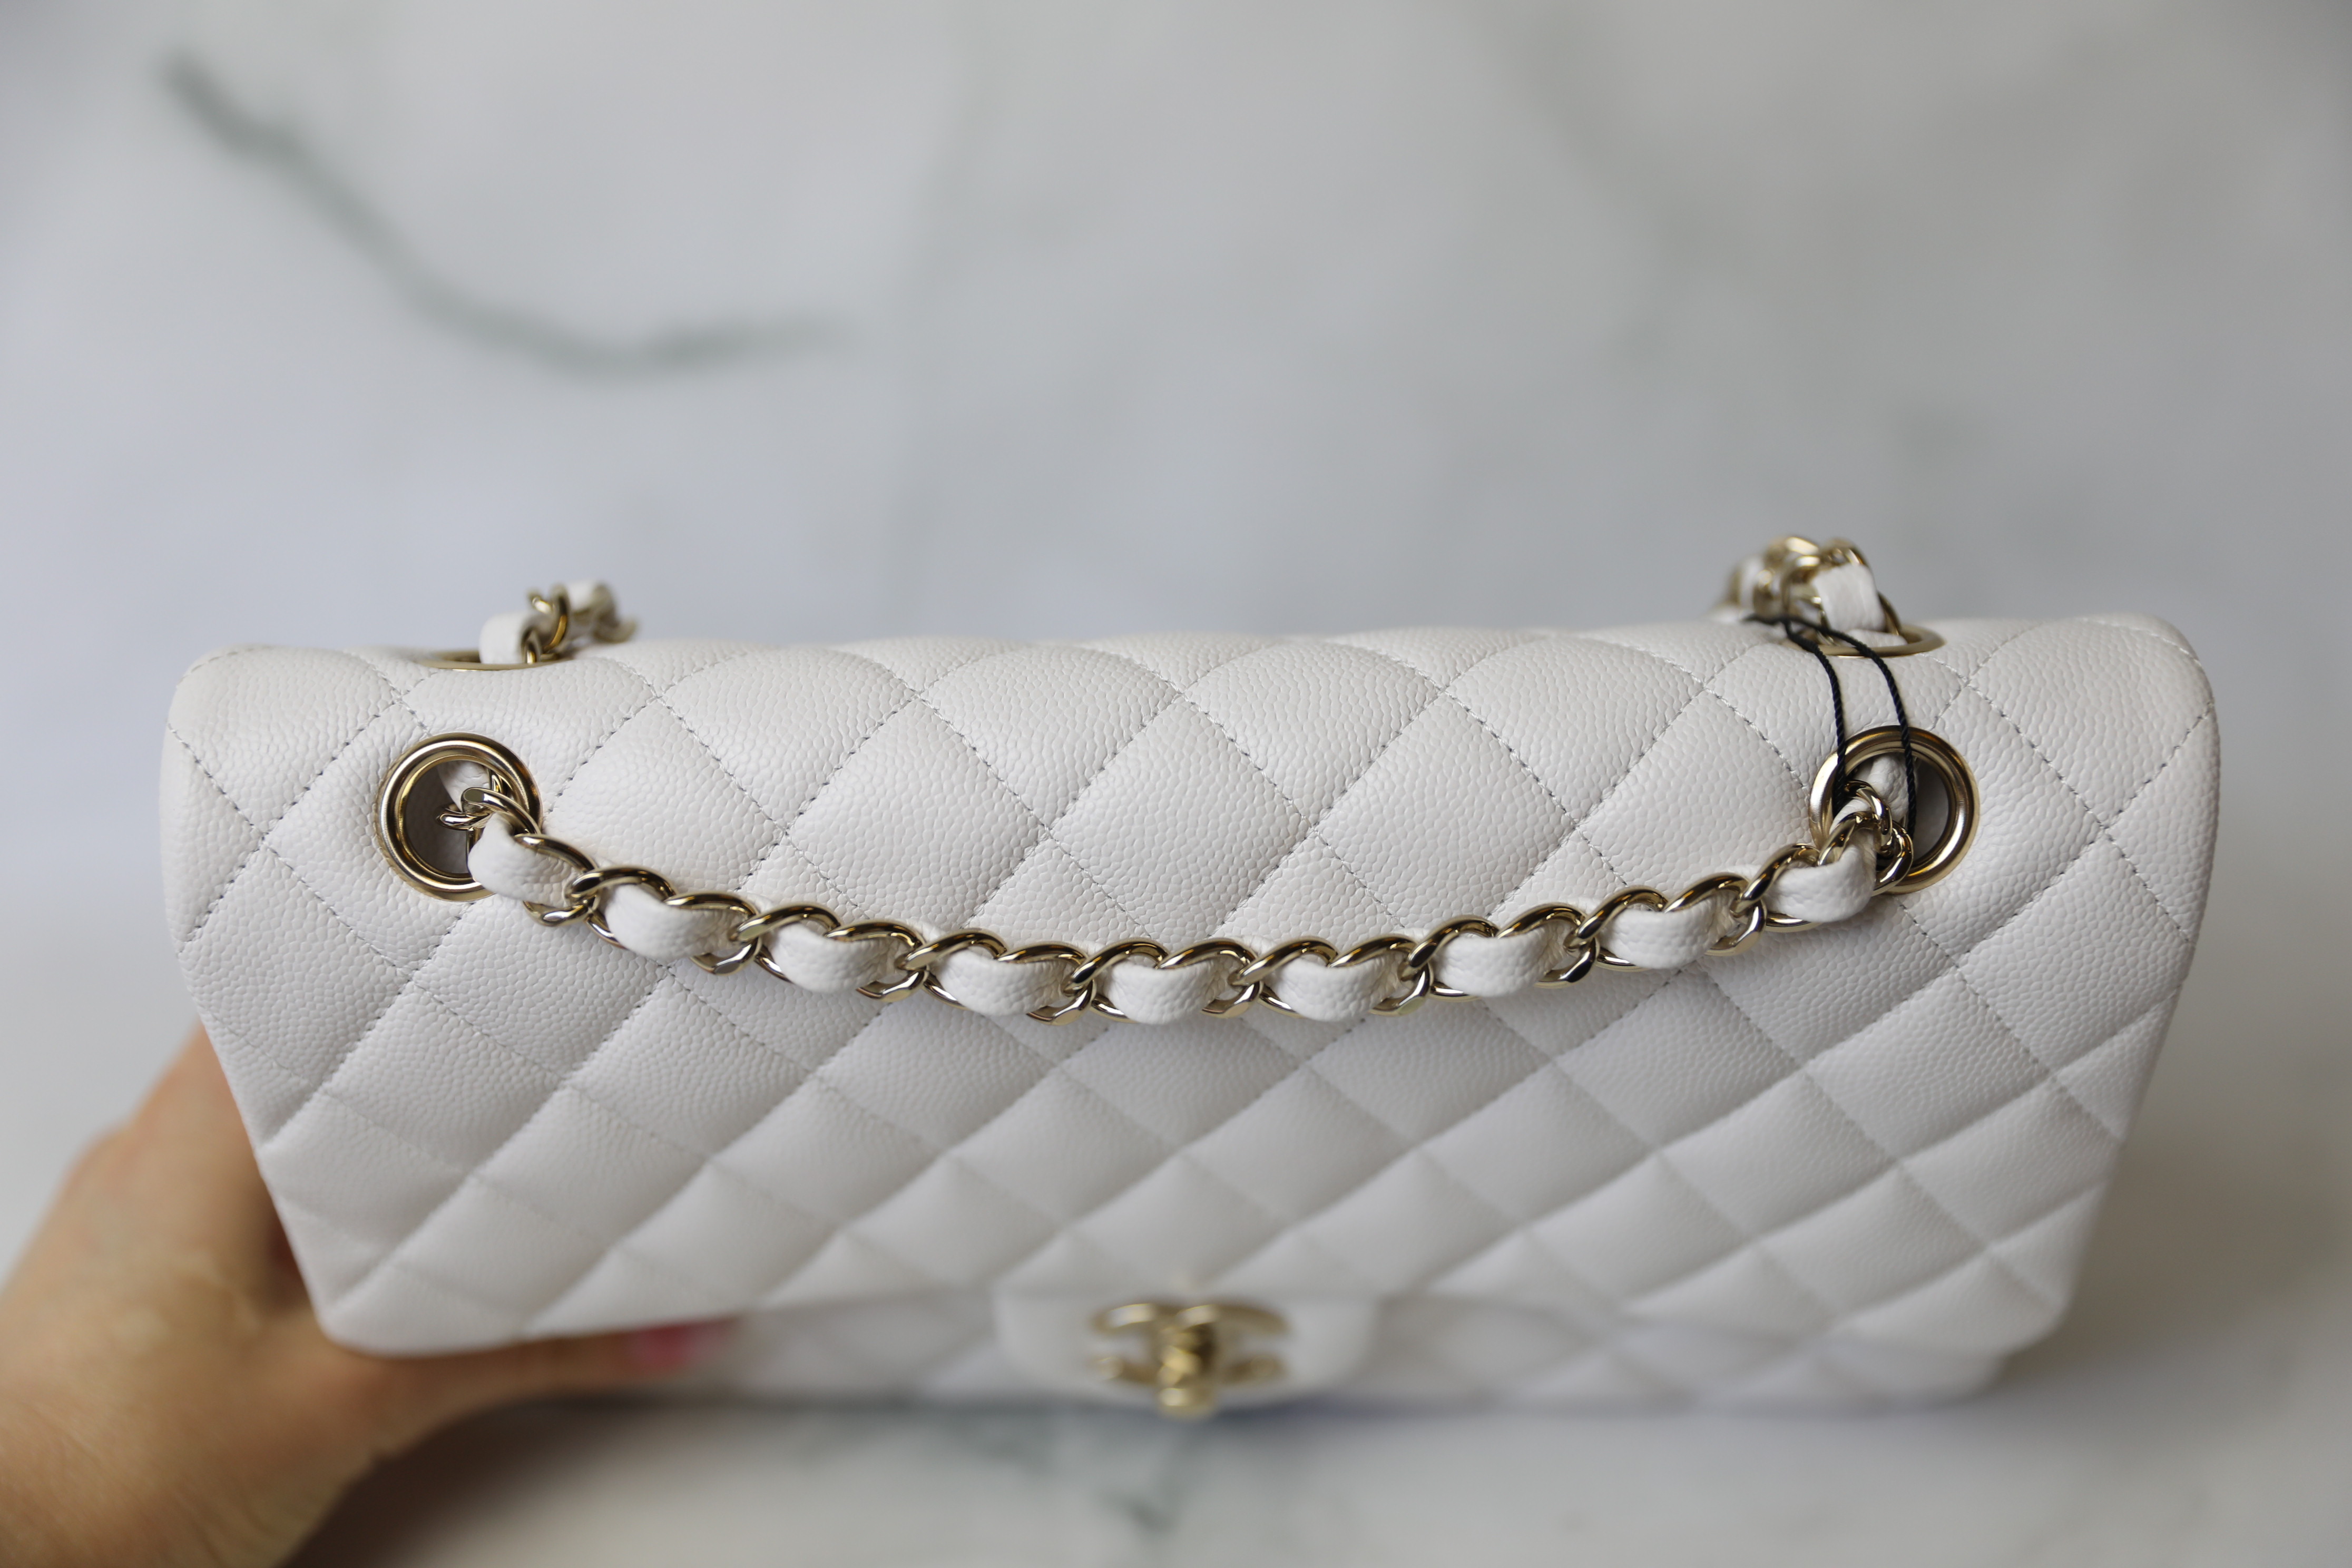 Chanel Classic Medium Double Flap, 19B White Caviar Leather, Shiny Gold  Hardware, Preowned in Box (Mint Condition) WA001 - Julia Rose Boston